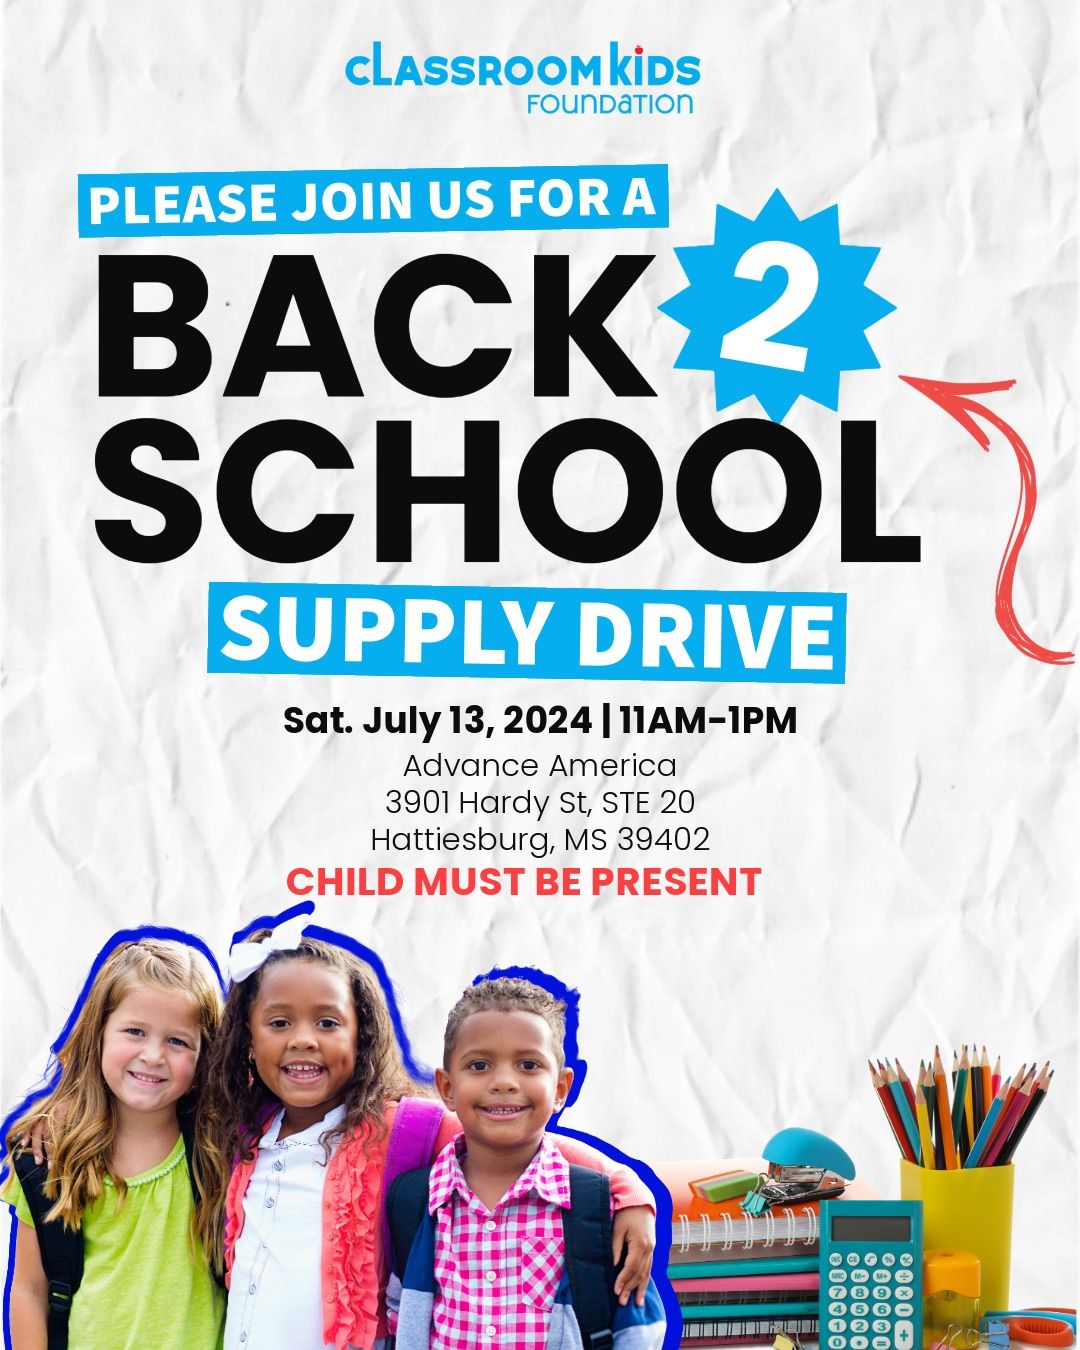 Back 2 School Drive - Classroom Kids Foundation